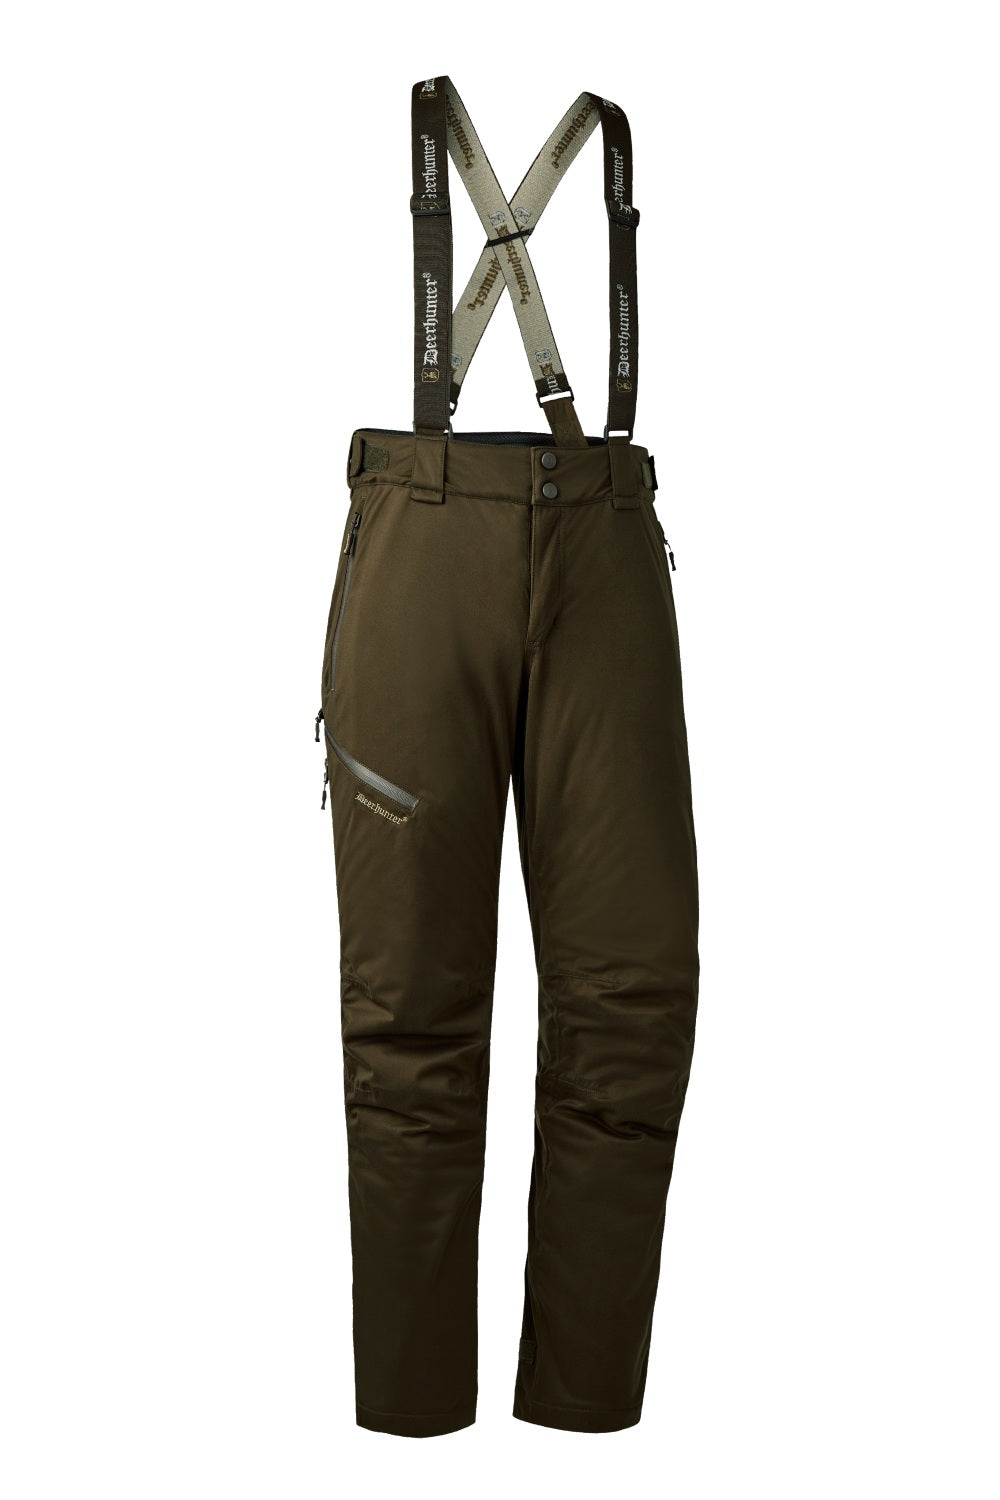 Deerhunter Excape Winter Waterproof Trousers- ART GREEN 